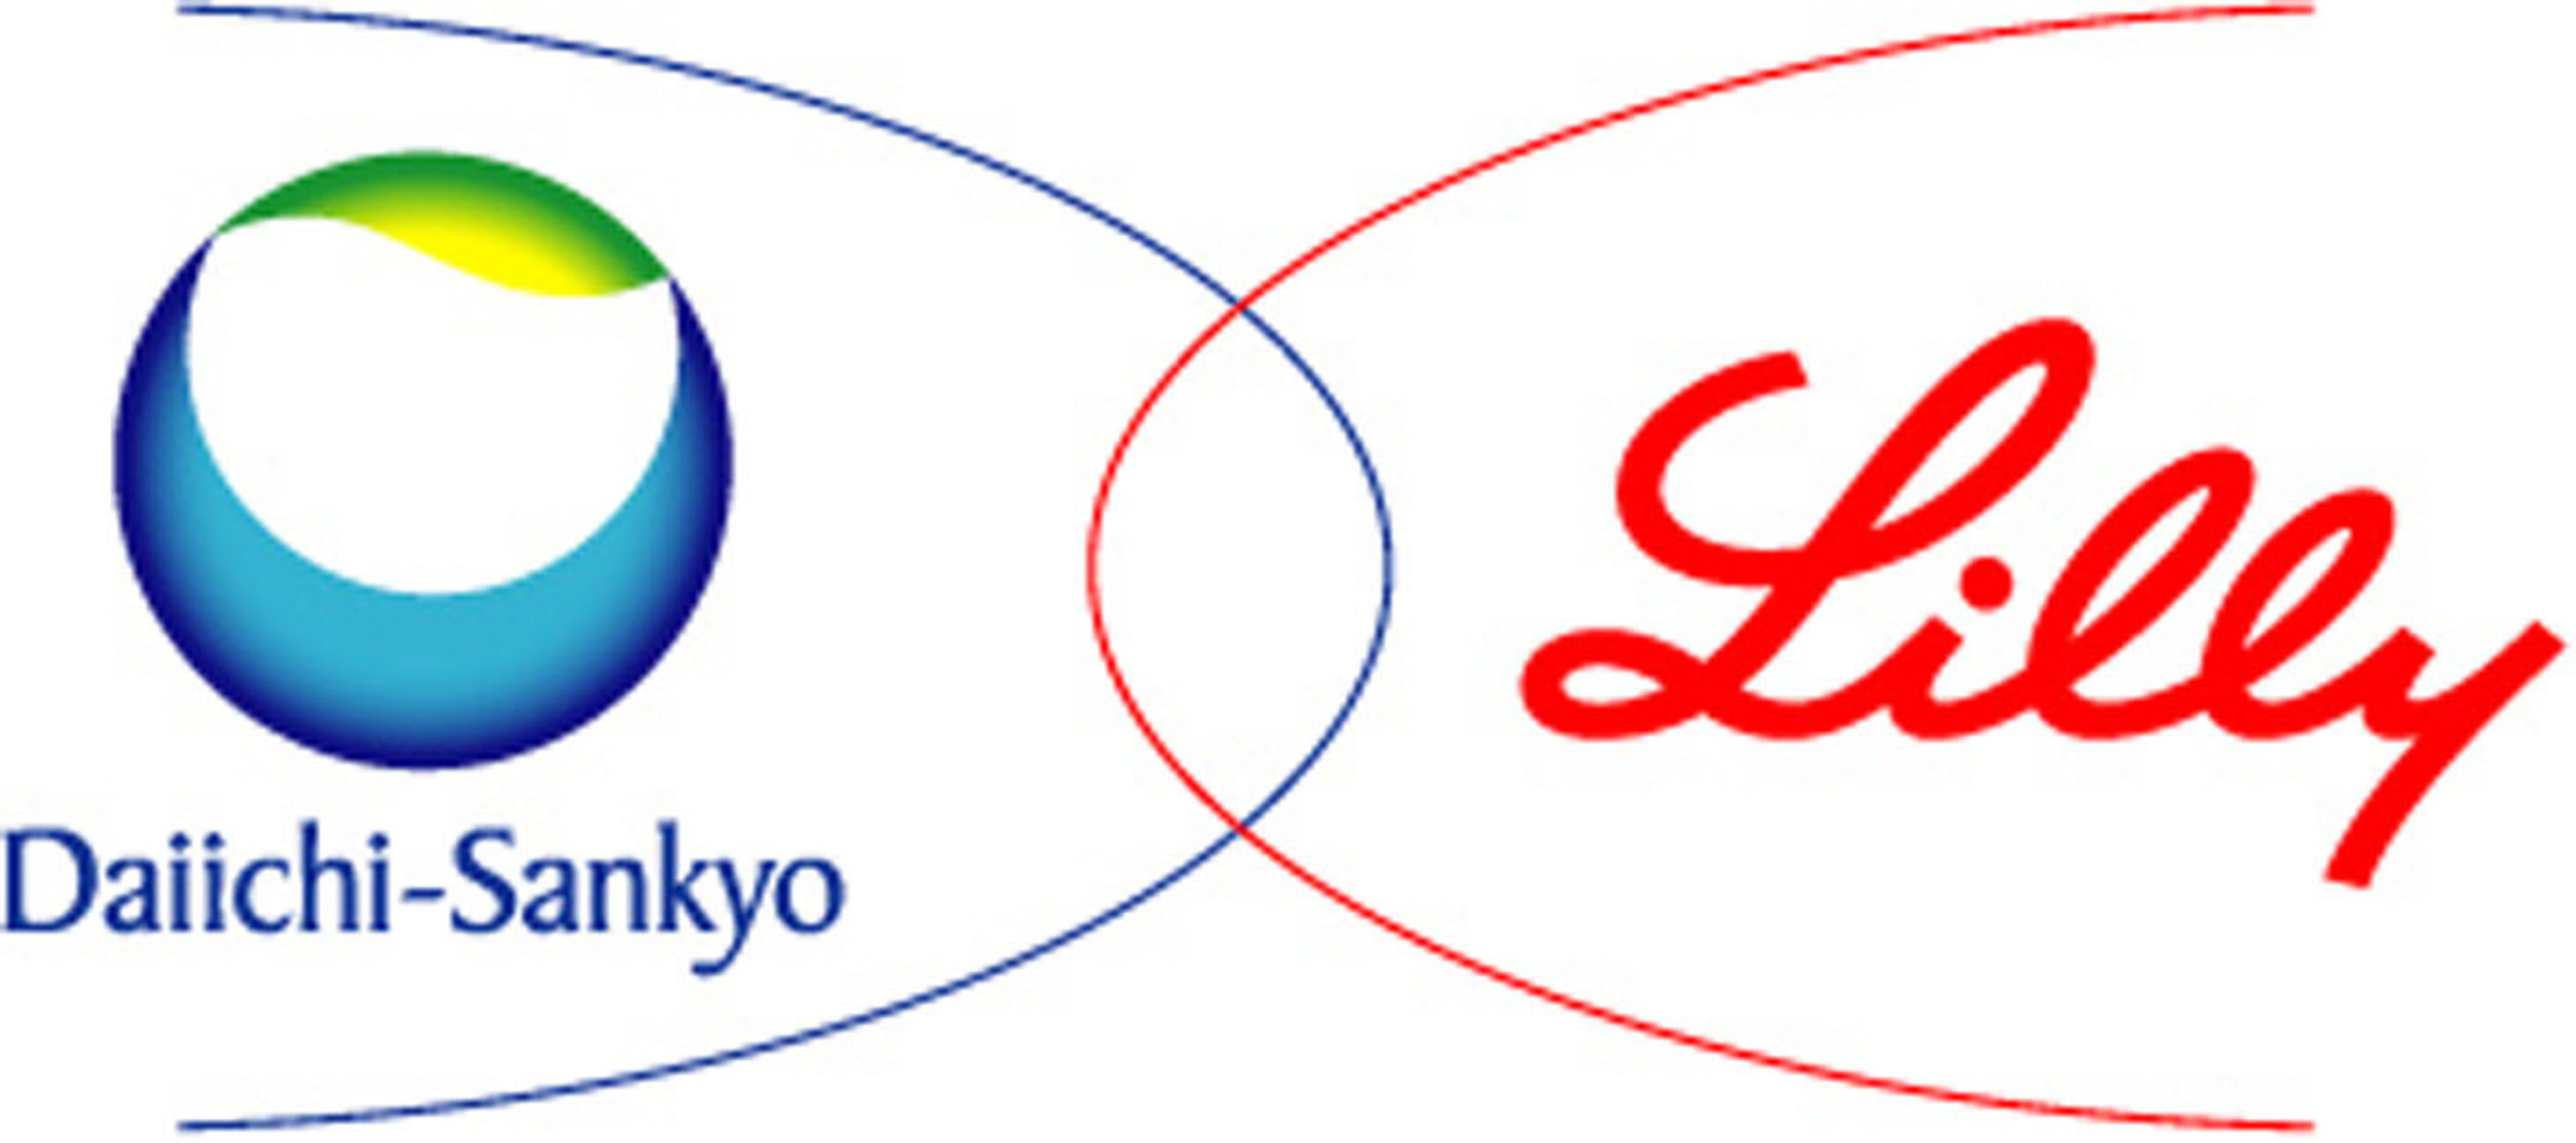 Eli Lilly and Company and Daiichi Sankyo logo.